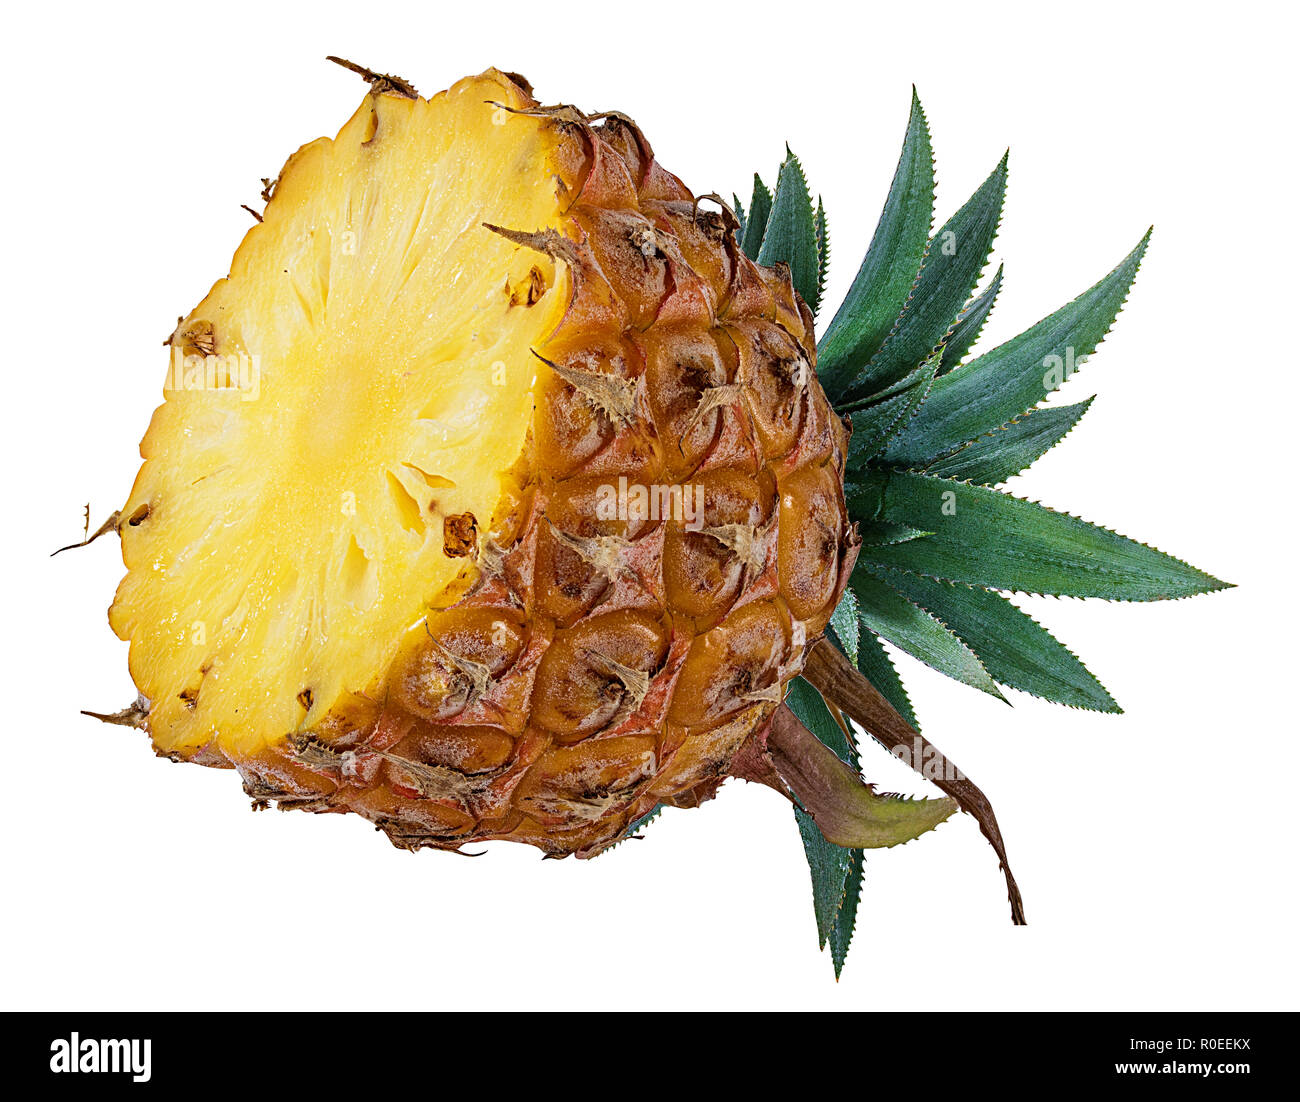 Ananas fresco isolato su sfondo bianco Foto Stock